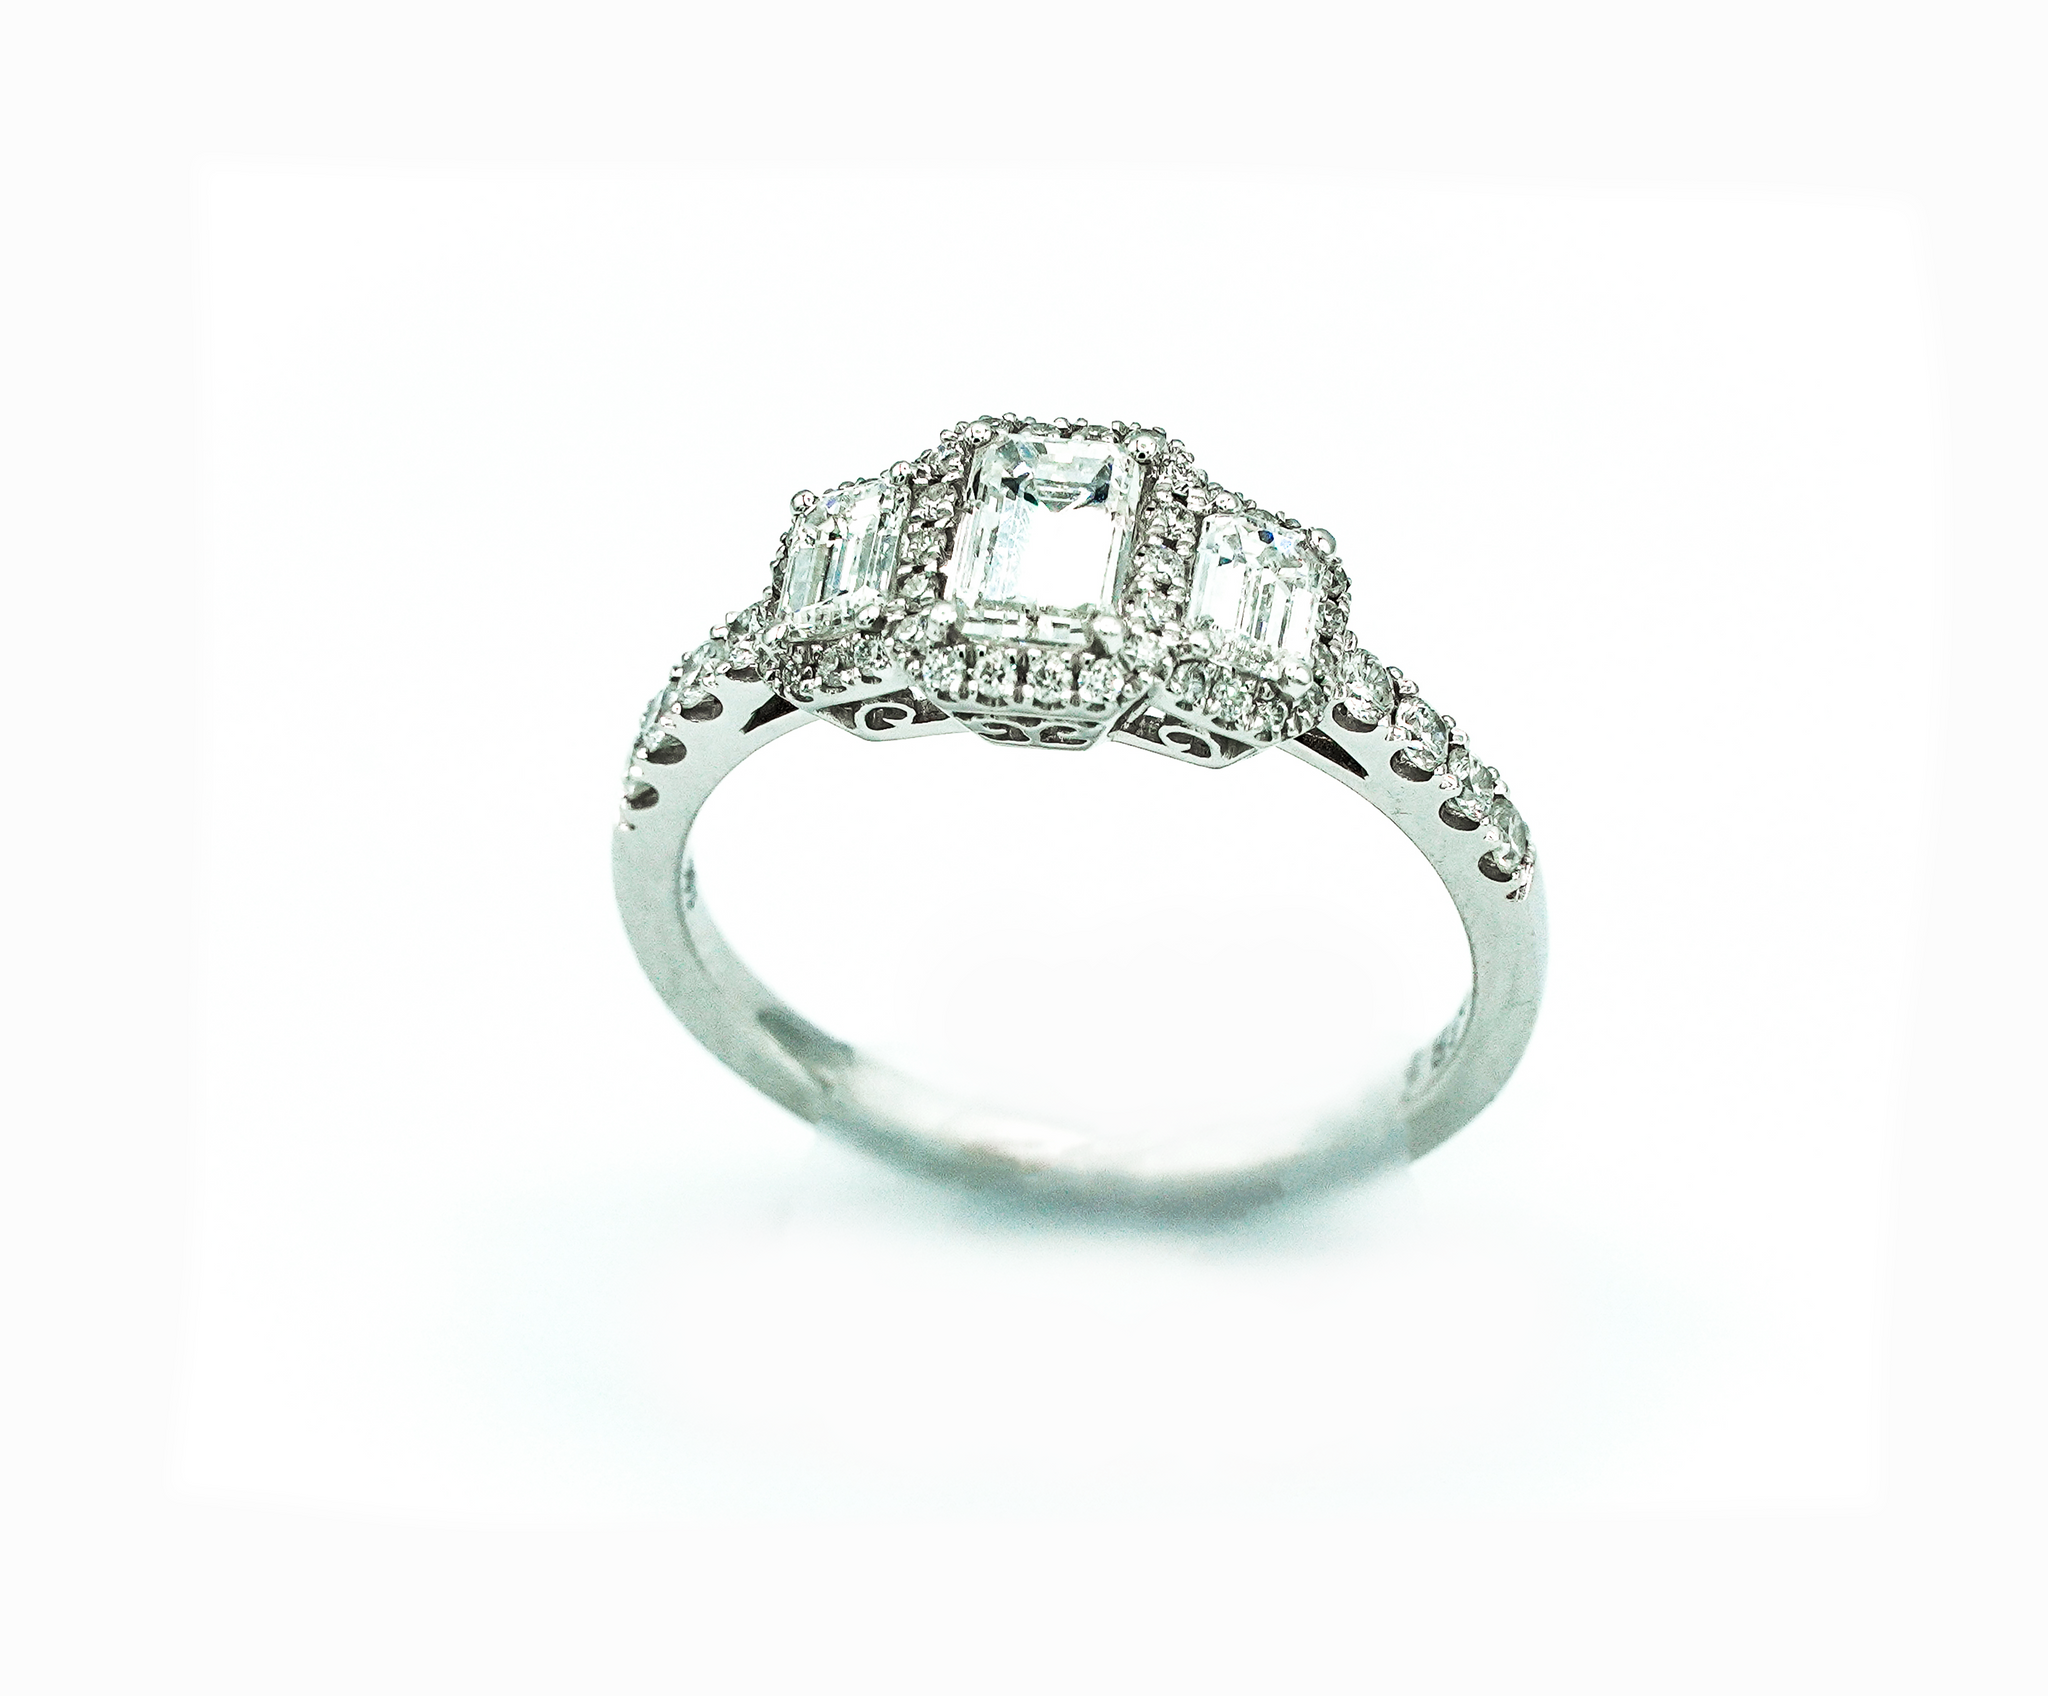 Montalvo Diamonds - One Lady's Diamond Engagement Ring in 14kt White Gold